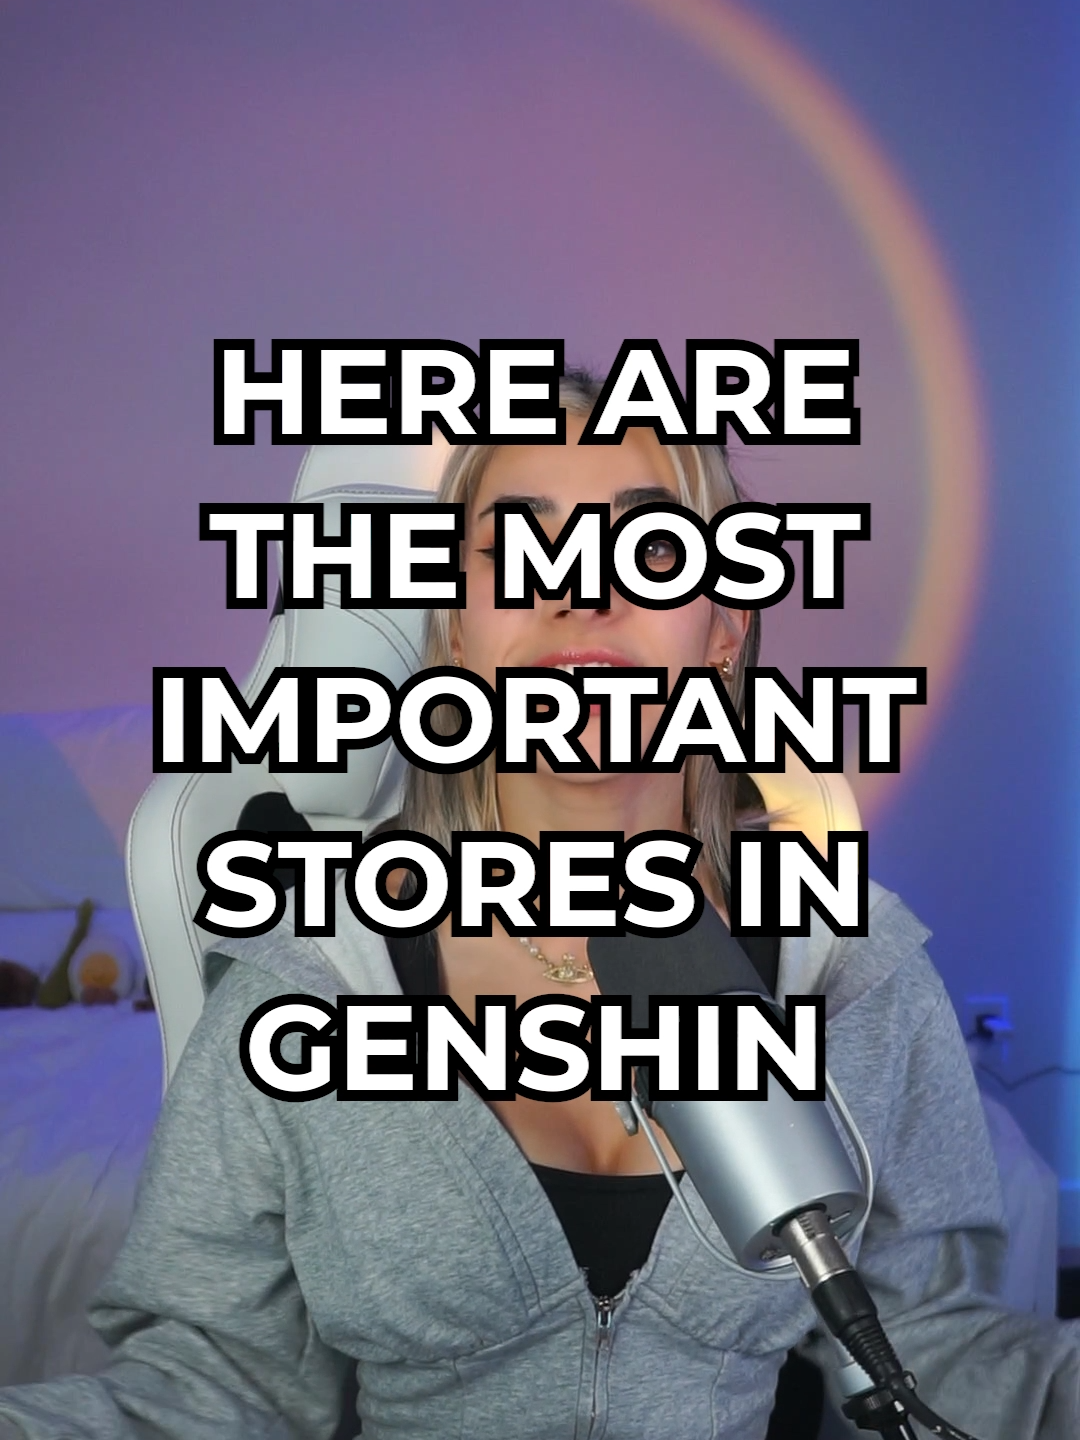 Sumeru NPC out there possessing the entirety of Teyvat specialities 😭 What are your favorite hidden shop? #genshin #GenshinImpact #genshinmemes #genshintok #genshinimpactmemes #hoyoverse #hoyocreators